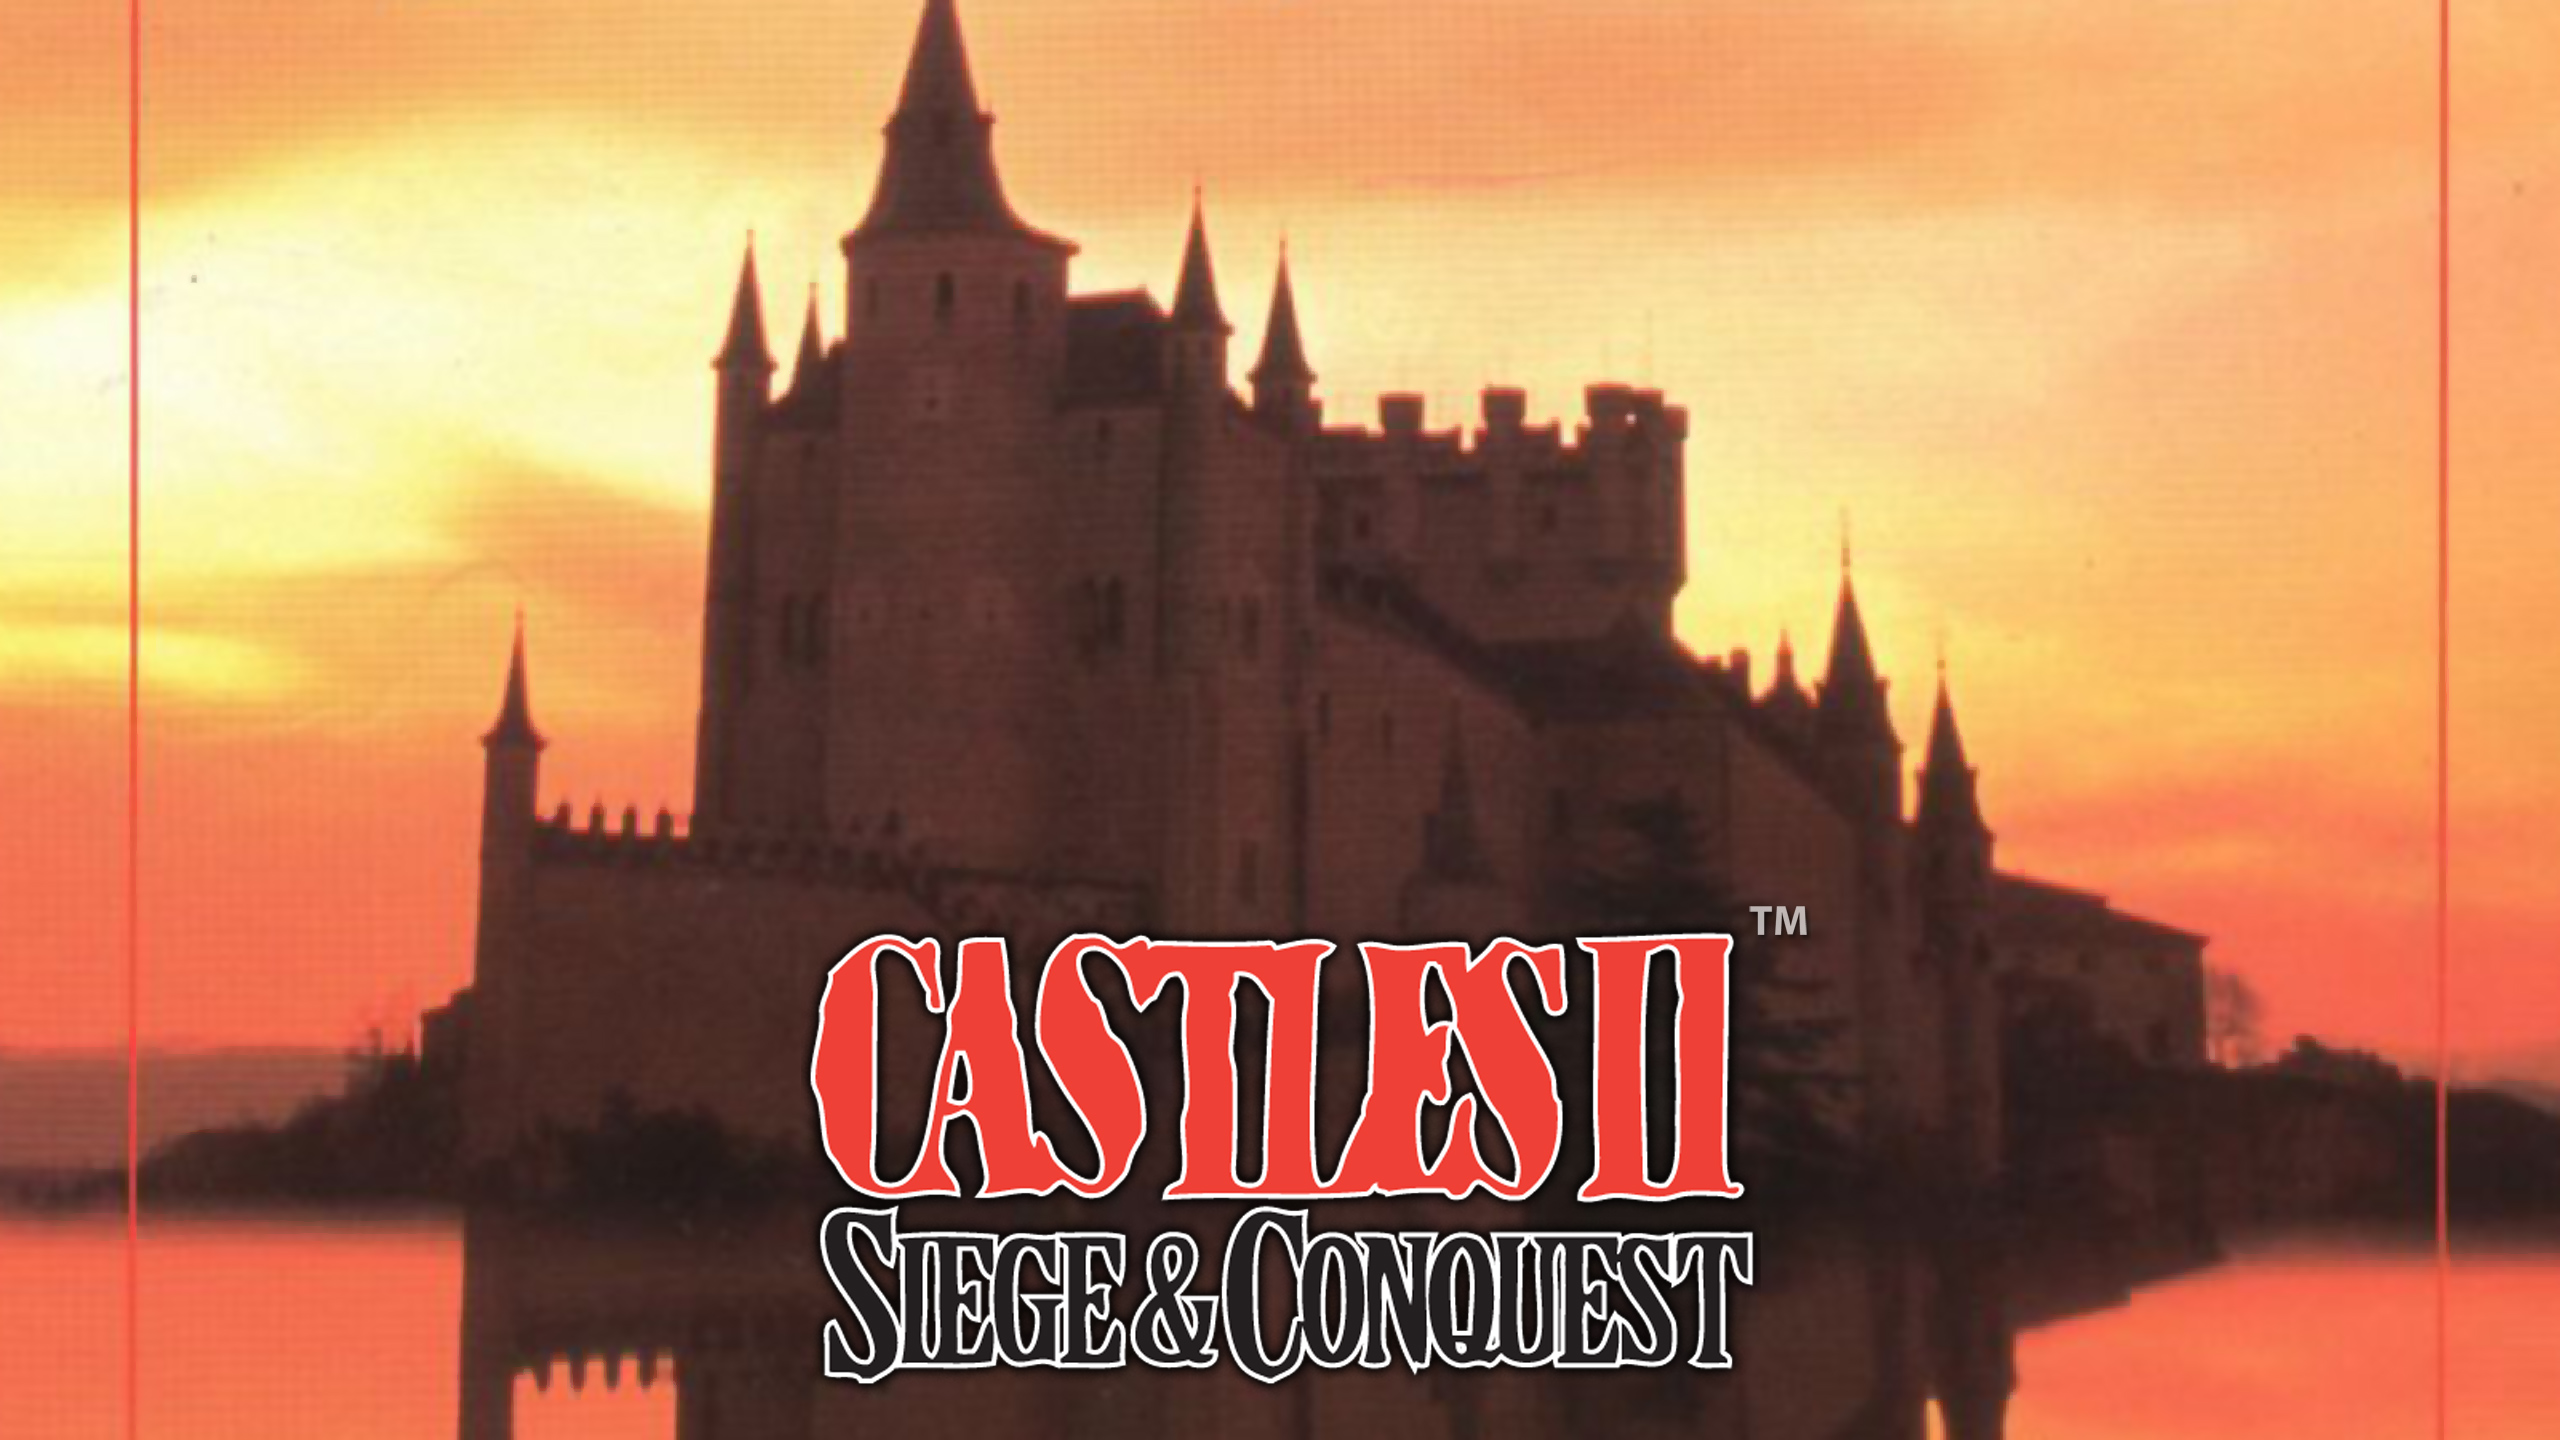 castles-ii-siege-conquest-wallpapers-wallpaper-cave